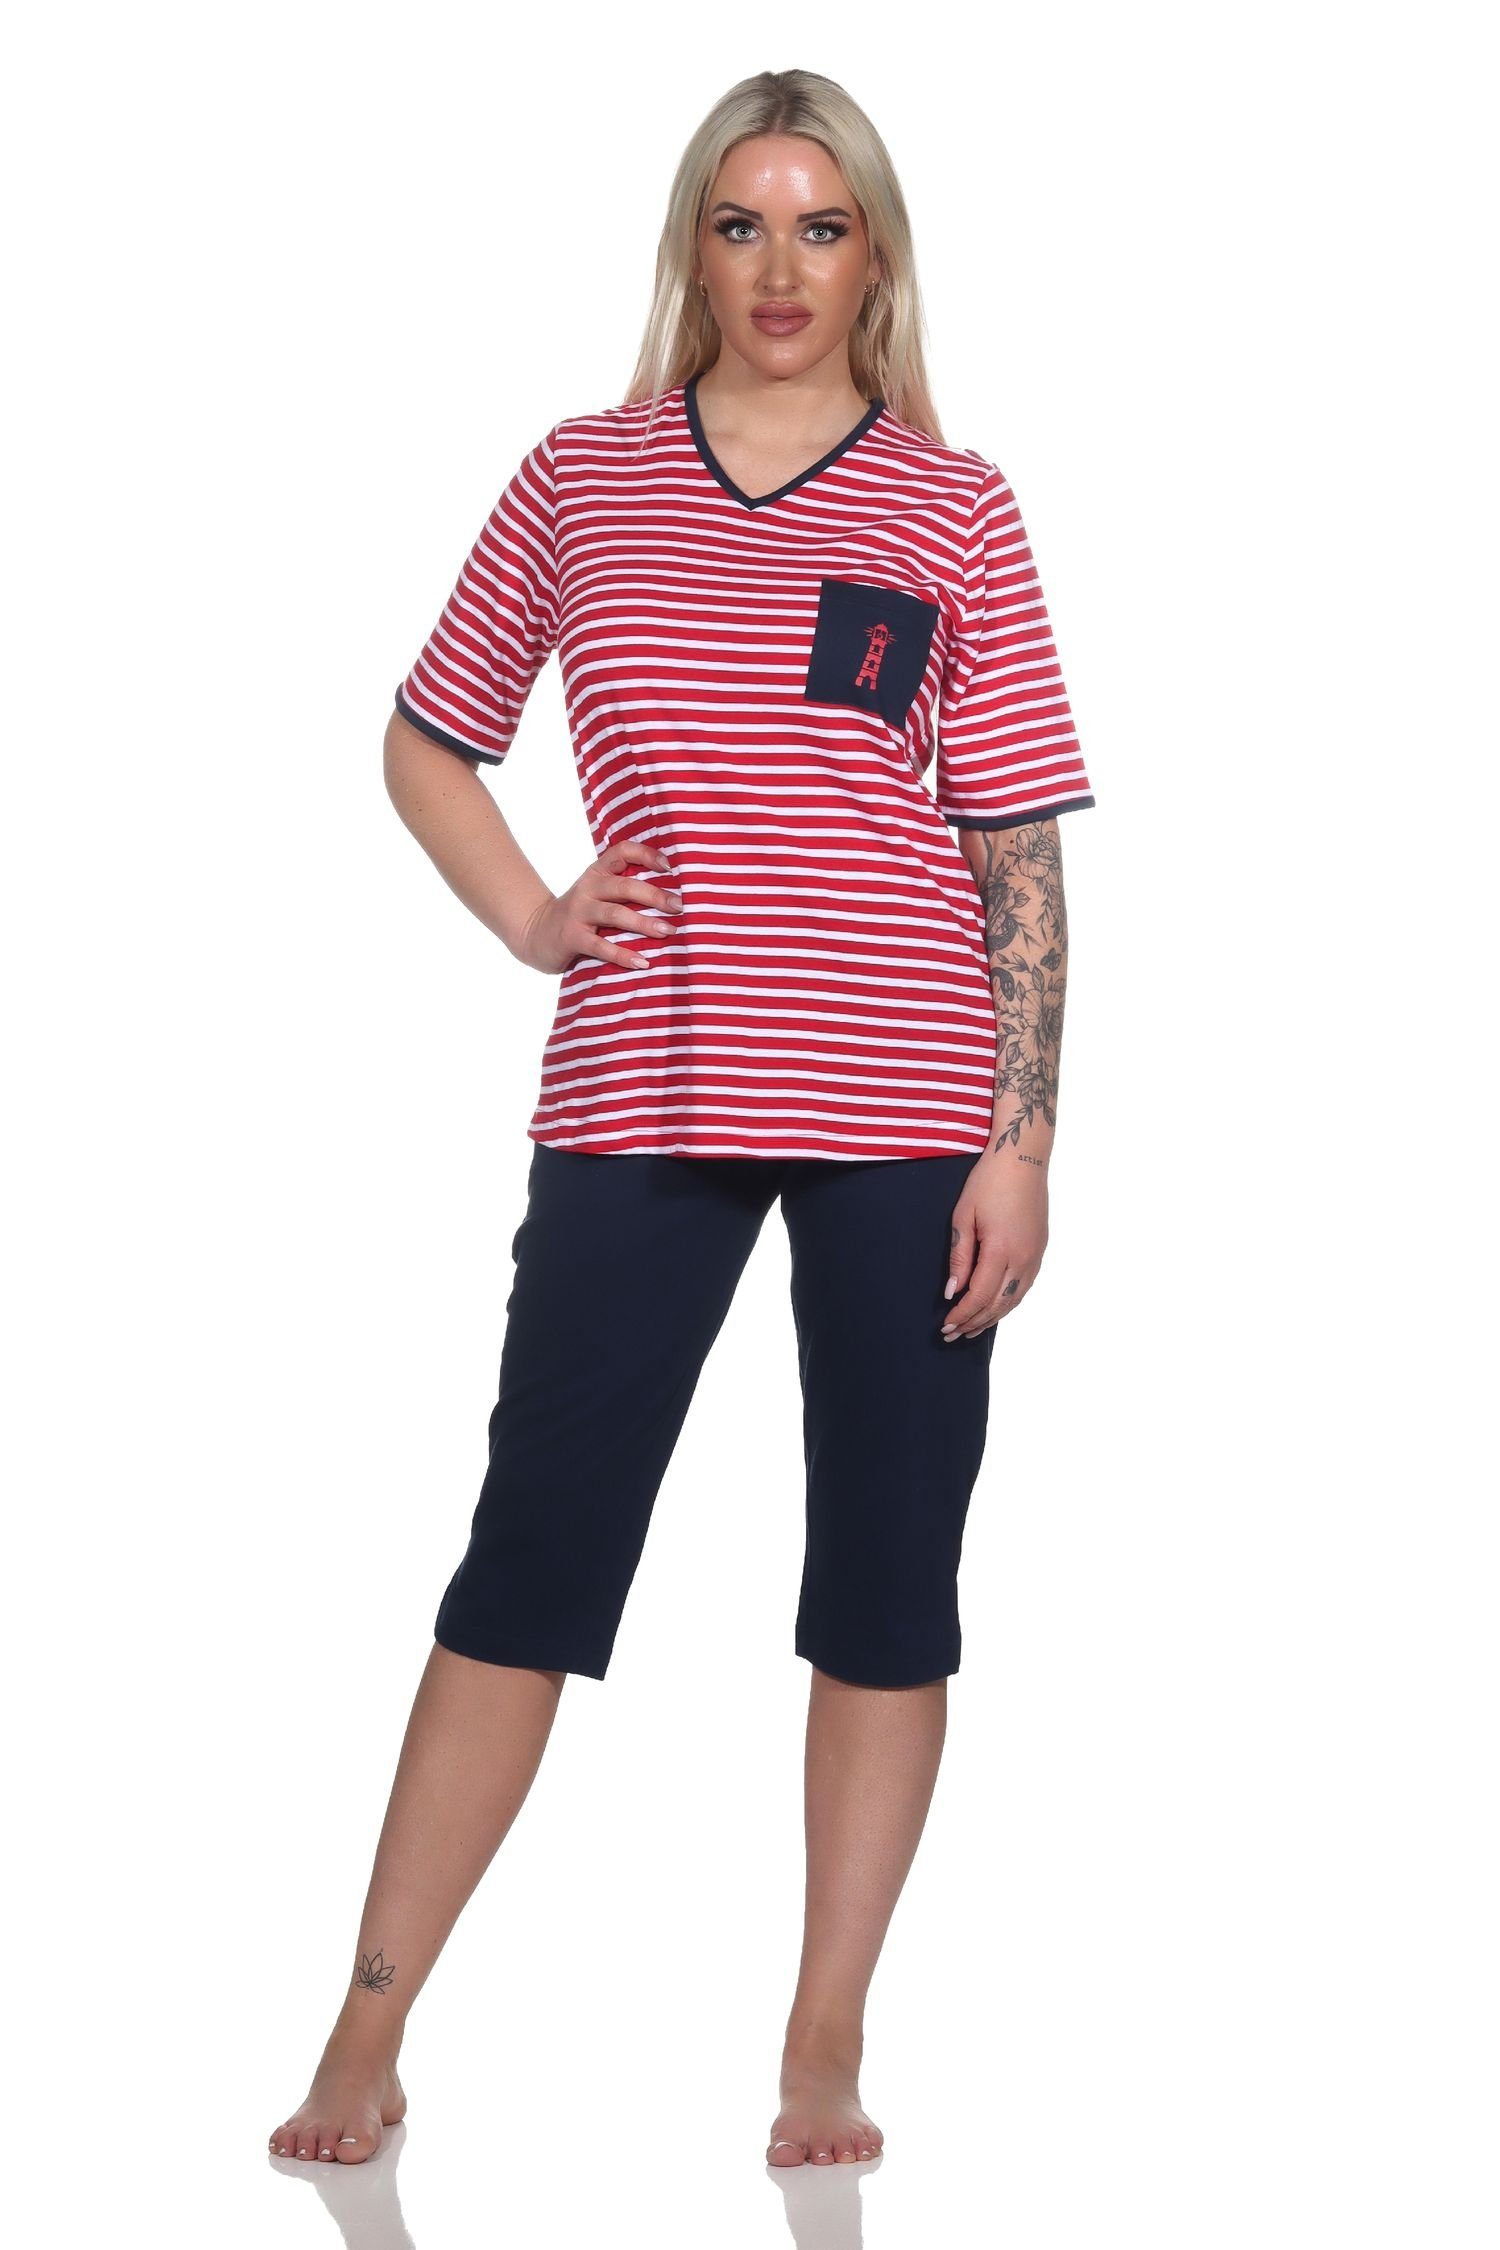 Optik Normann Leuchtturm Damen Kurzarm maritimer Pyjama Pyjama in rot Motiv und Capri